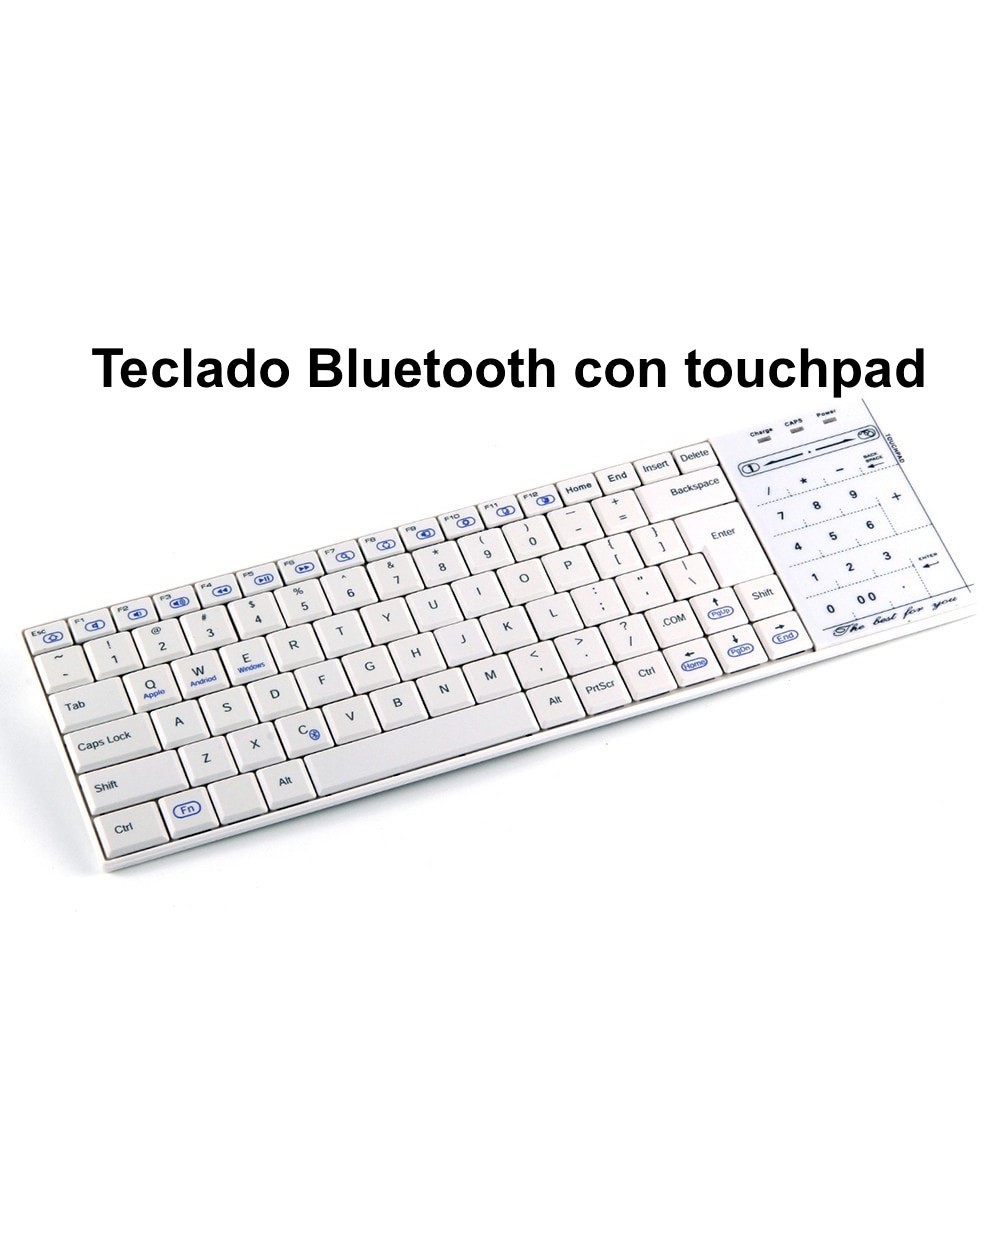 Teclado bluetooth con touchpad